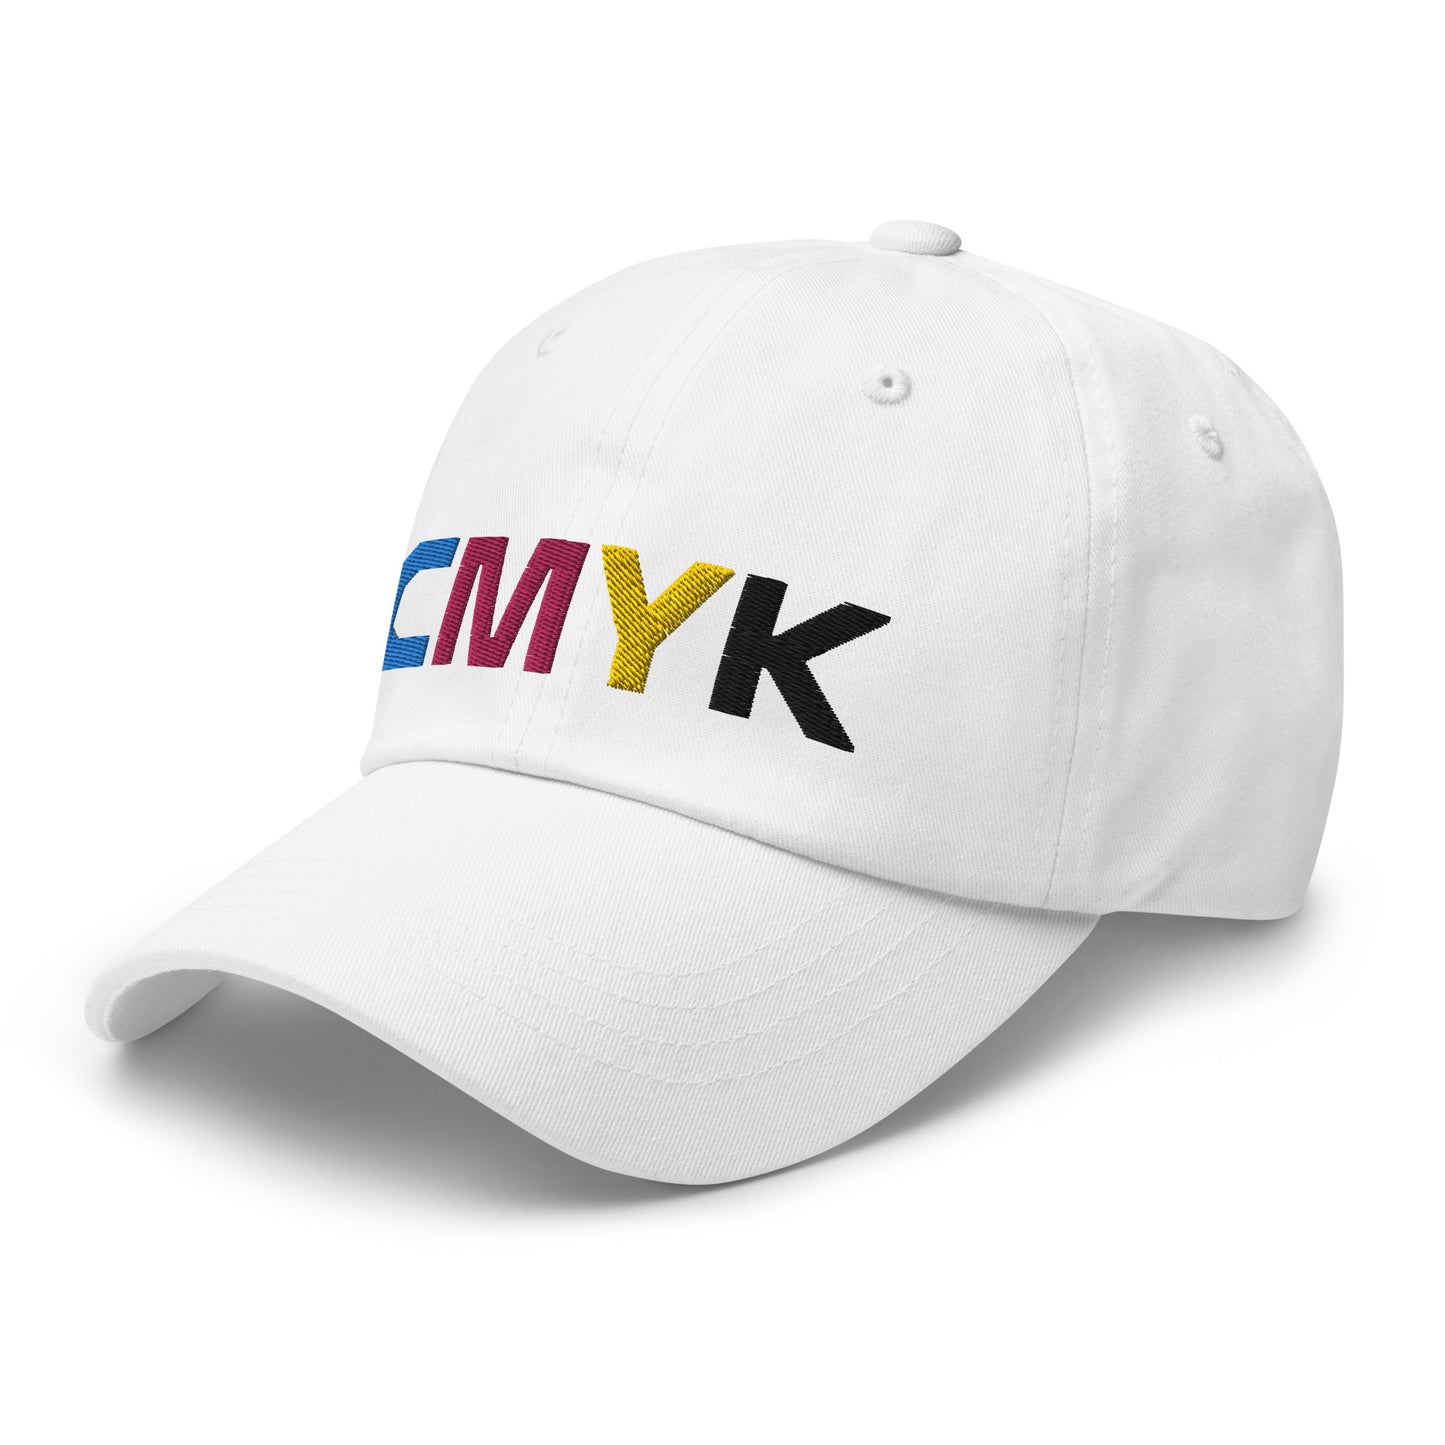 CMYK Embroidered Dad hat